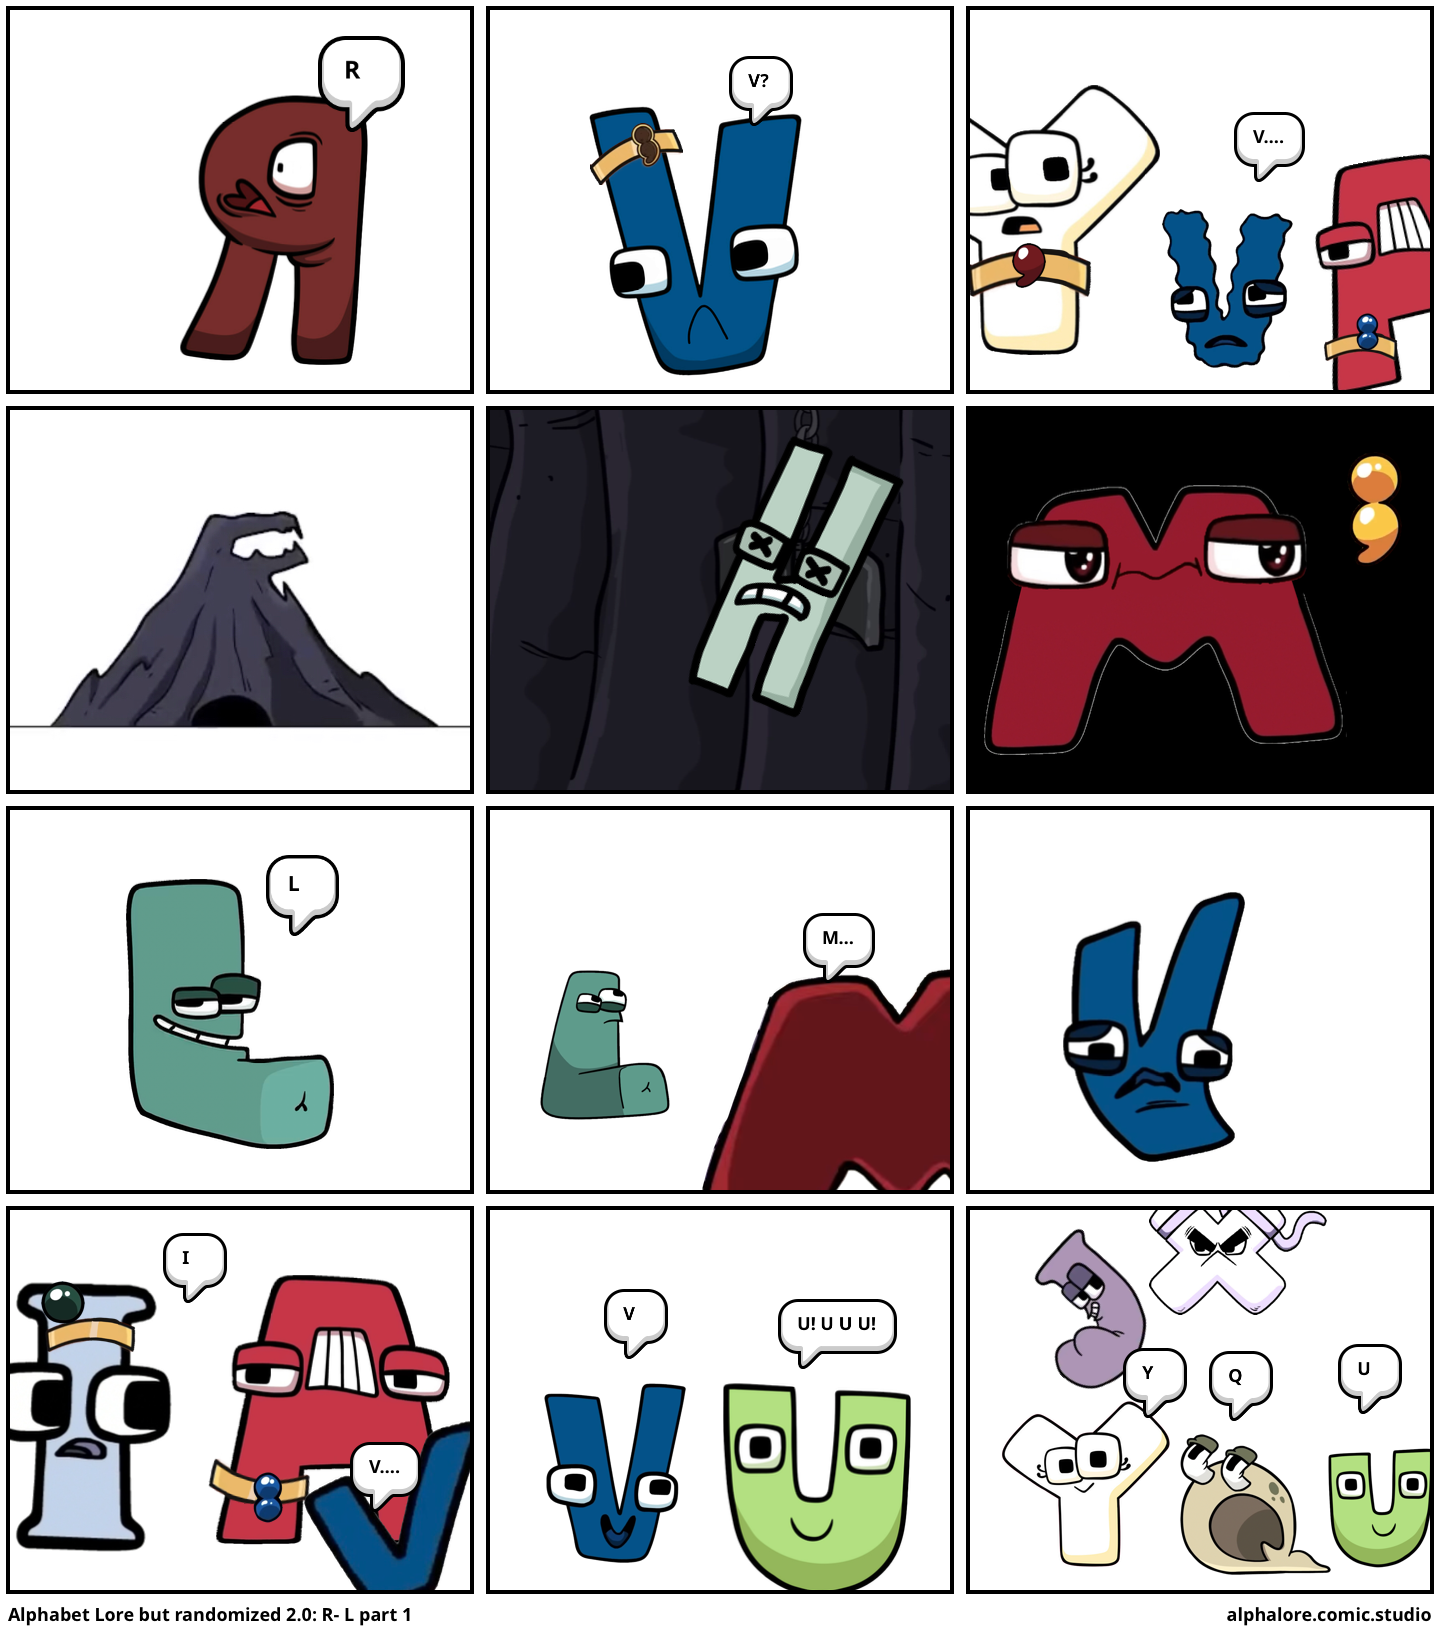 Alphabet Lore but randomized: A - Comic Studio